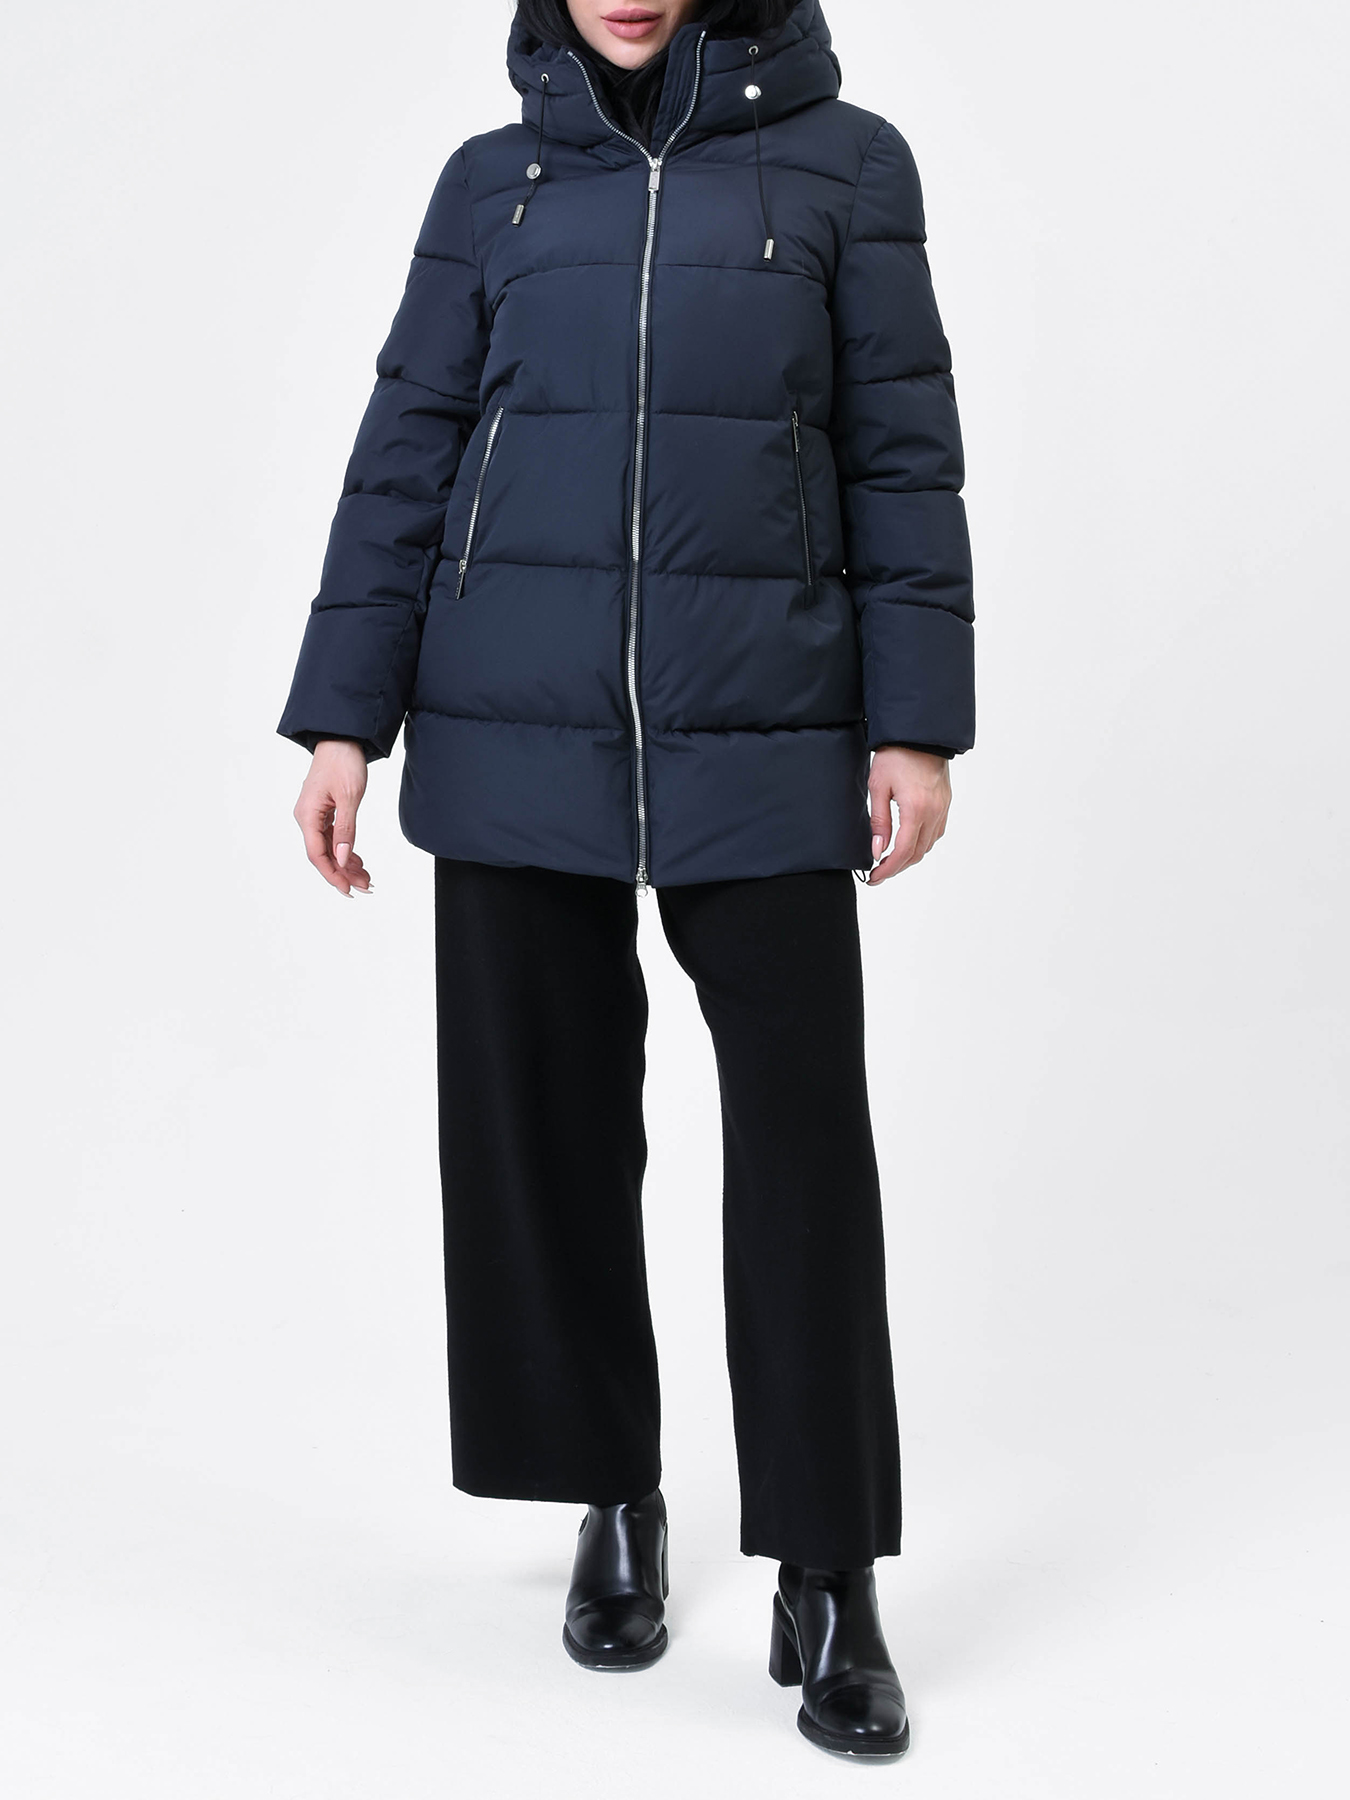 Пальто зимнее Maritta 433612-024, цвет темно-синий, размер 52 - фото 4